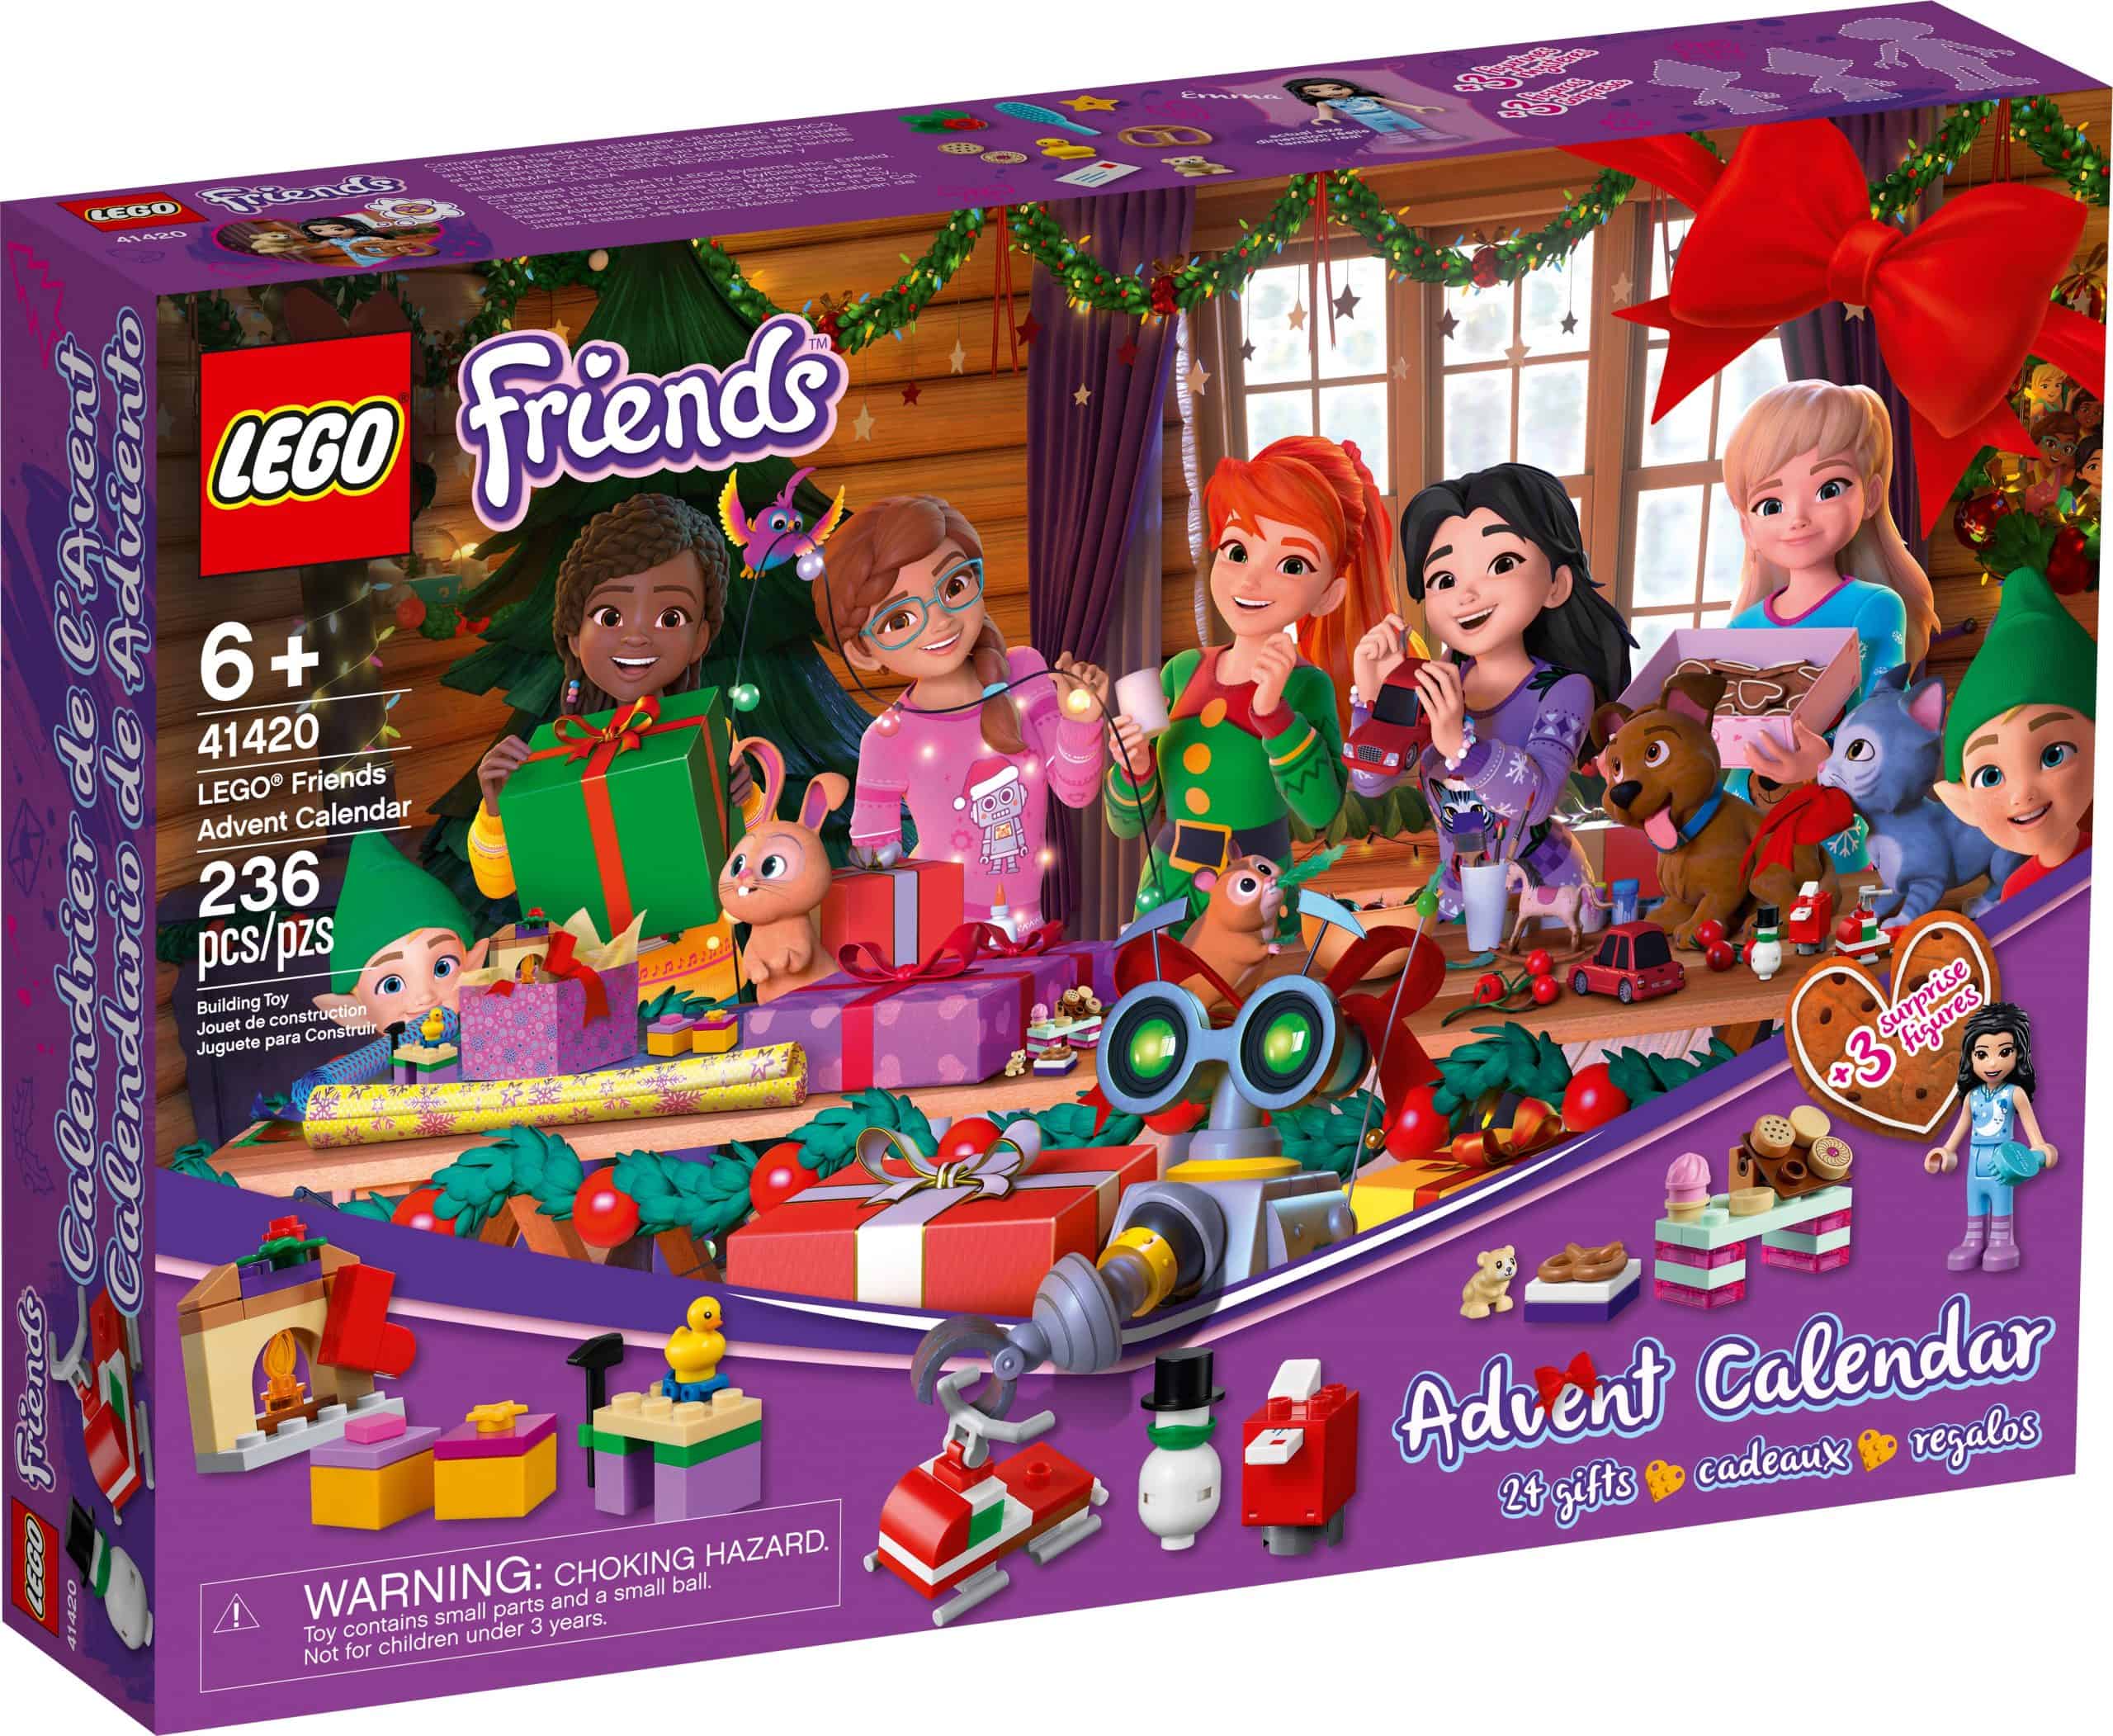 LEGO 41420 Friends adventkalender